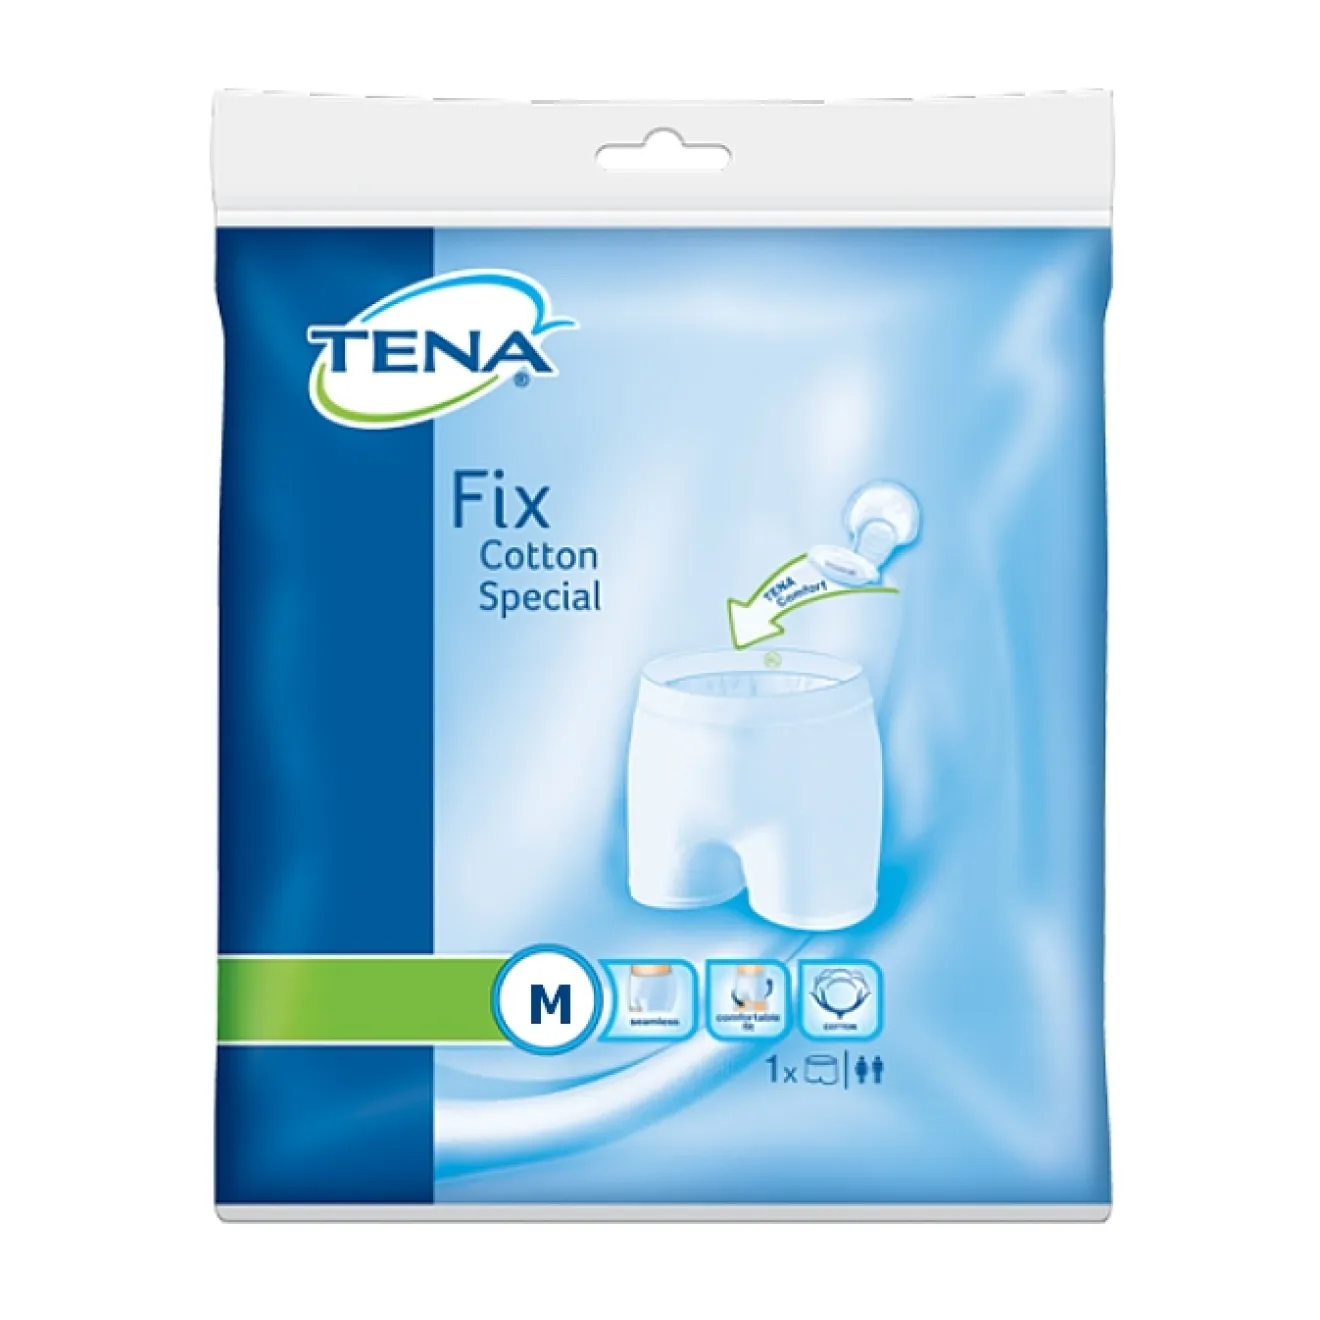 TENA FIX Cotton Special M Fixierhosen 34 ST